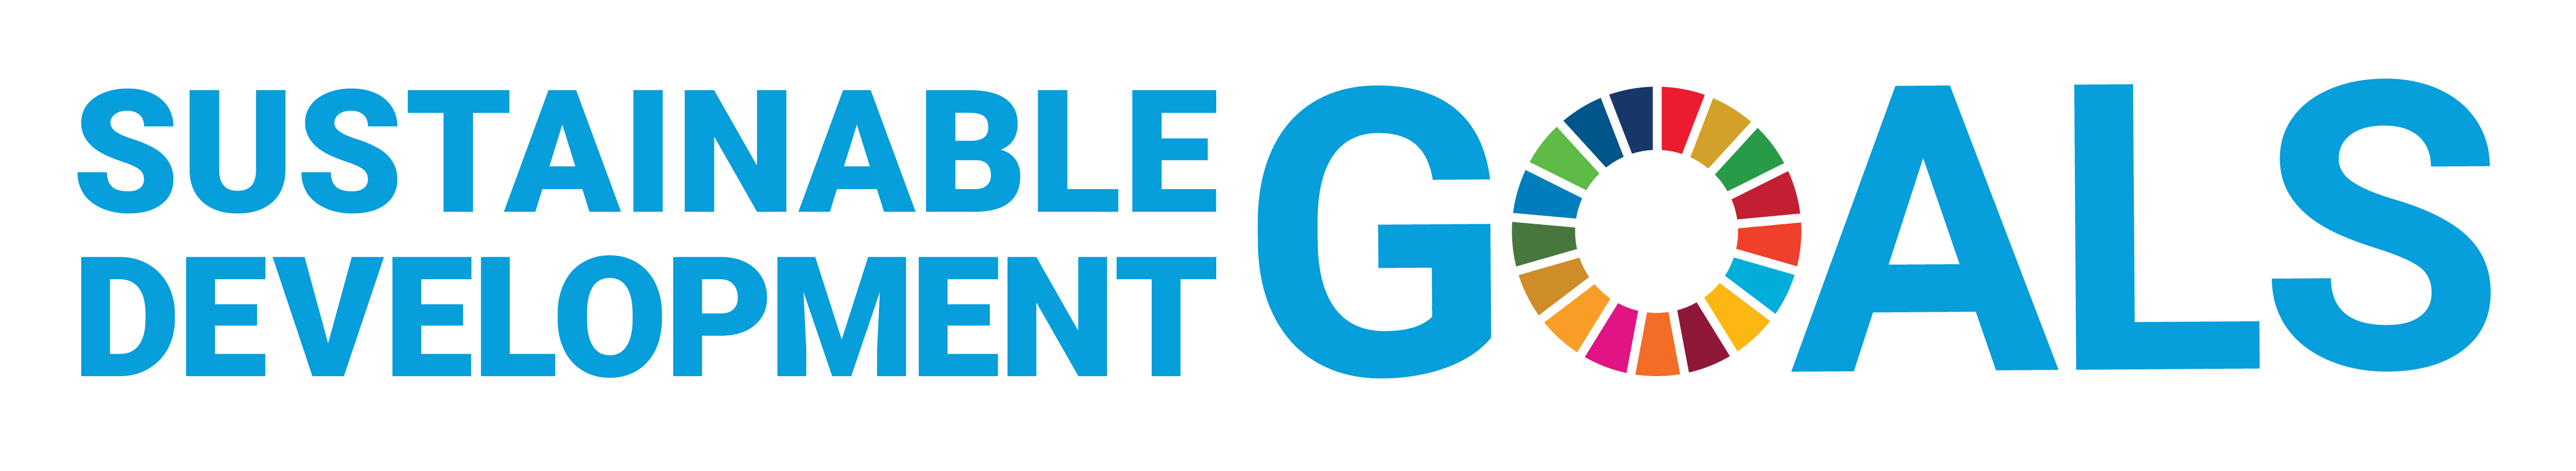 E SDG logo without UN emblem horizontal CMYK Transparent